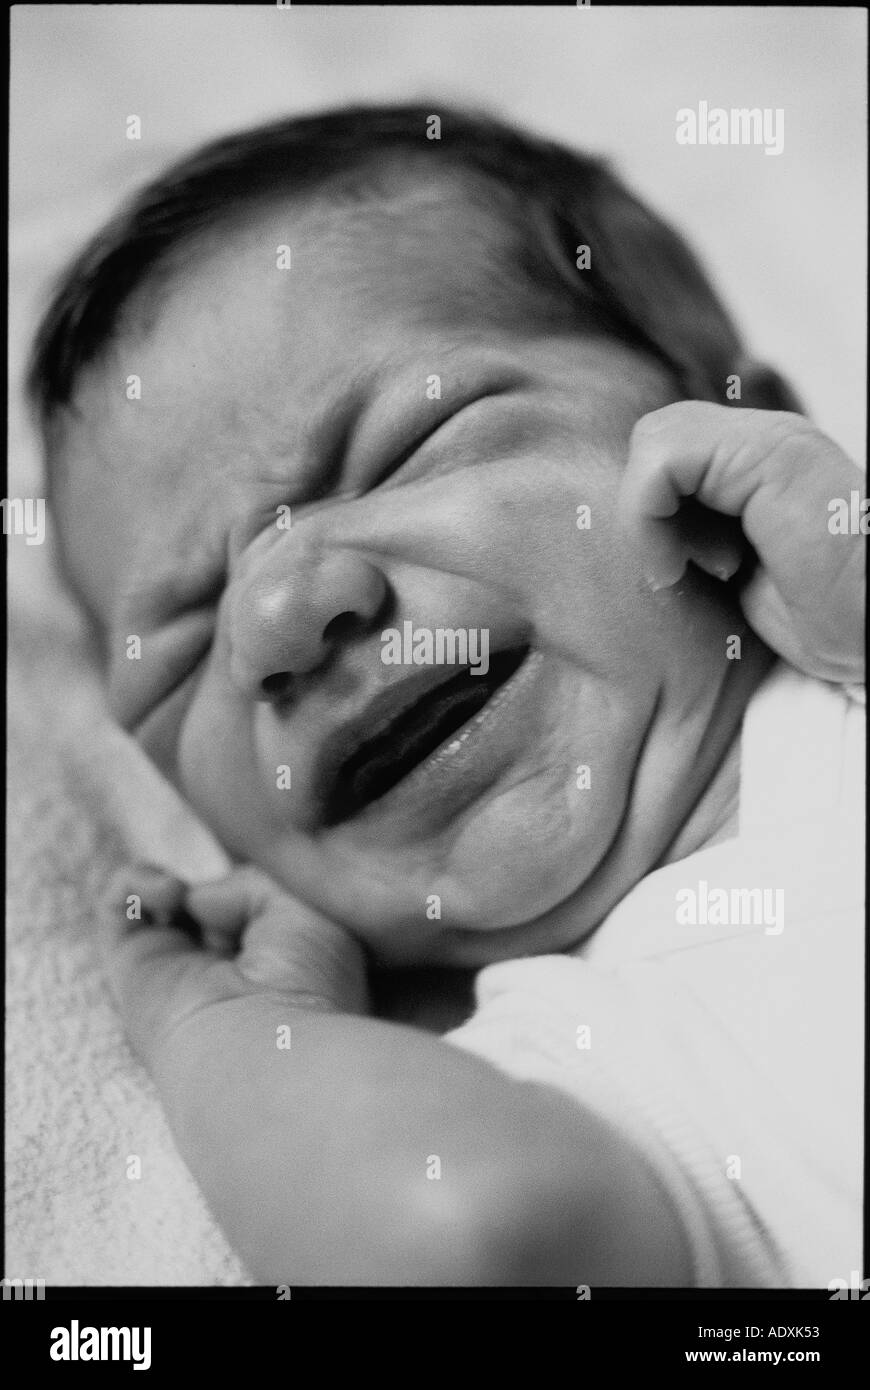 Baby Boy crying Stock Photo